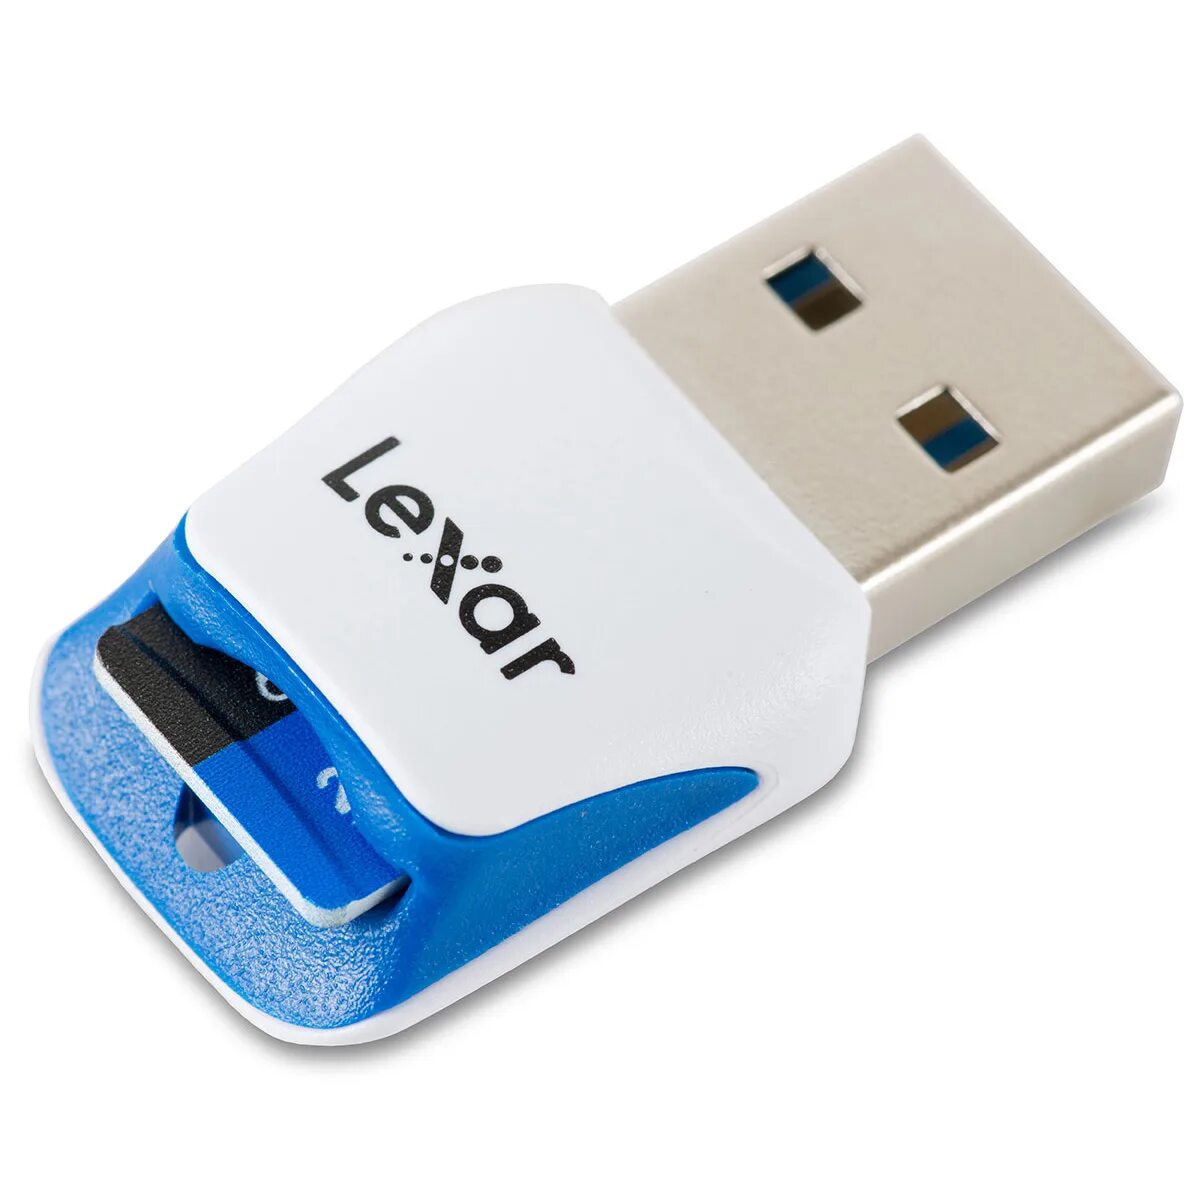 Переходник usb 3.0 купить. Адаптер USB 3.0 микро SD. USB 3.0 MICROSD Card Reader. Картридер для микро SD USB 3.0. USB SD Кардридер USB 3.0.